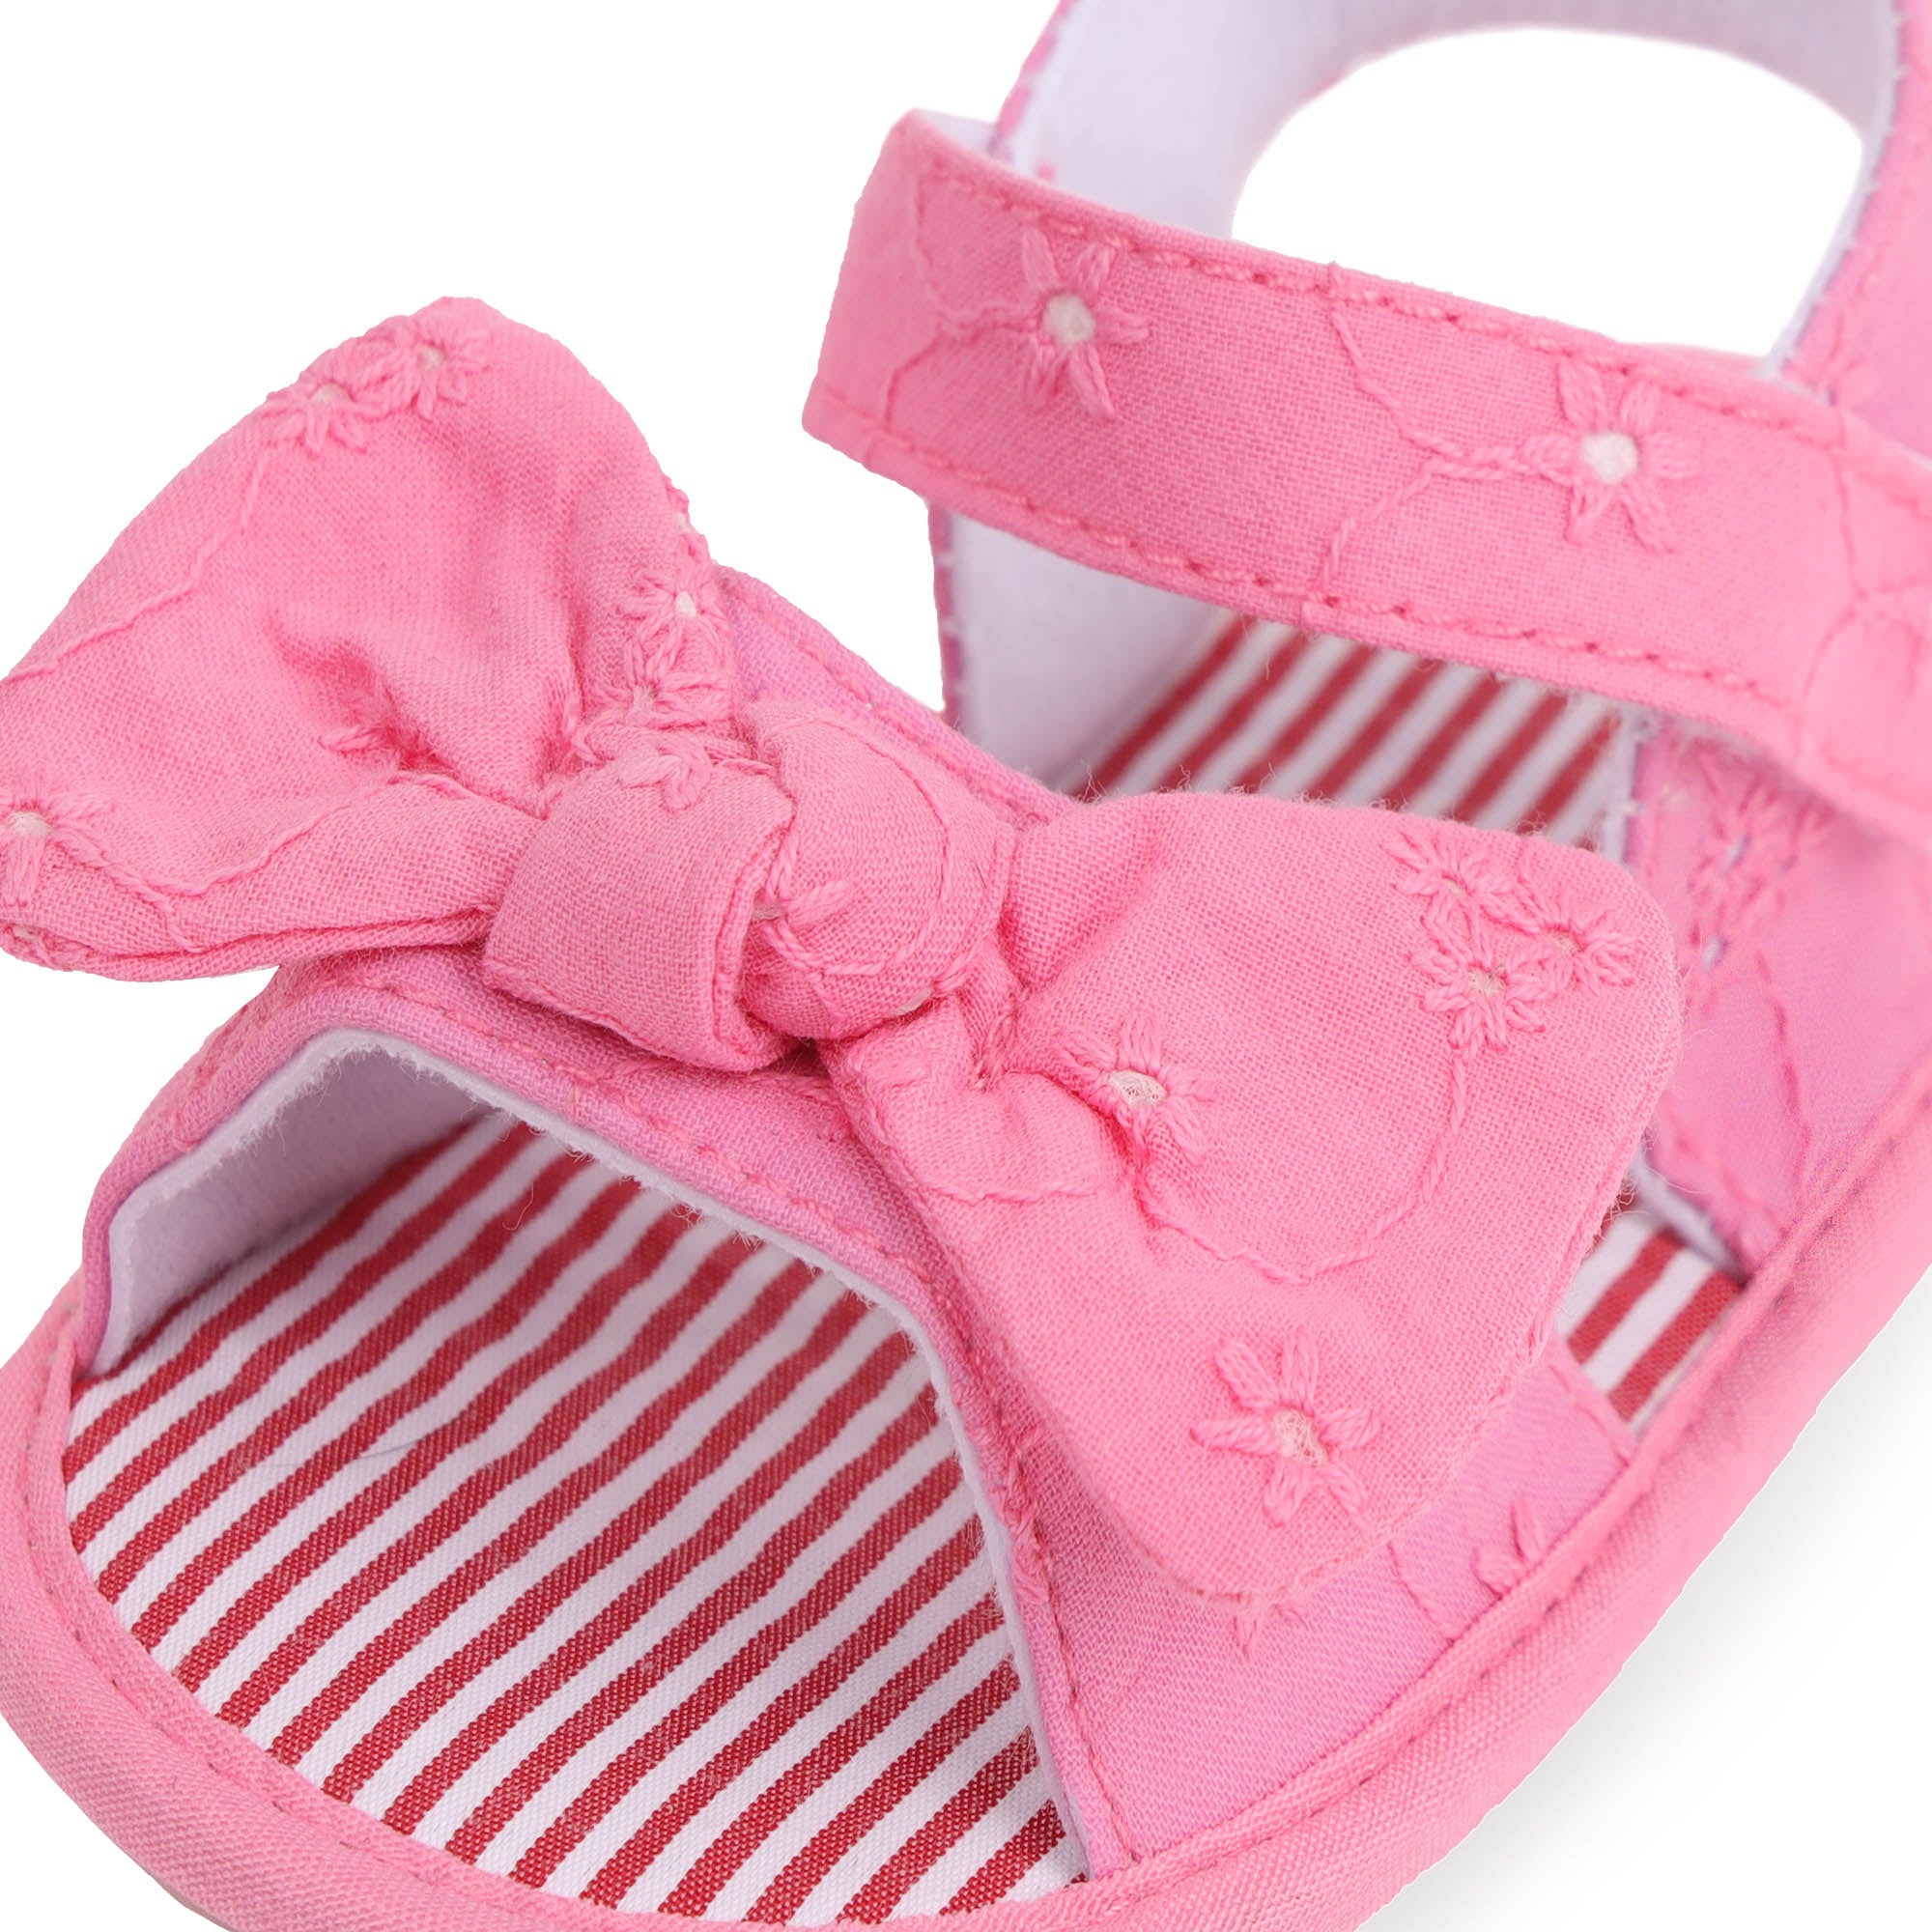 Kicks & Crawl- Woven Pink Sandals